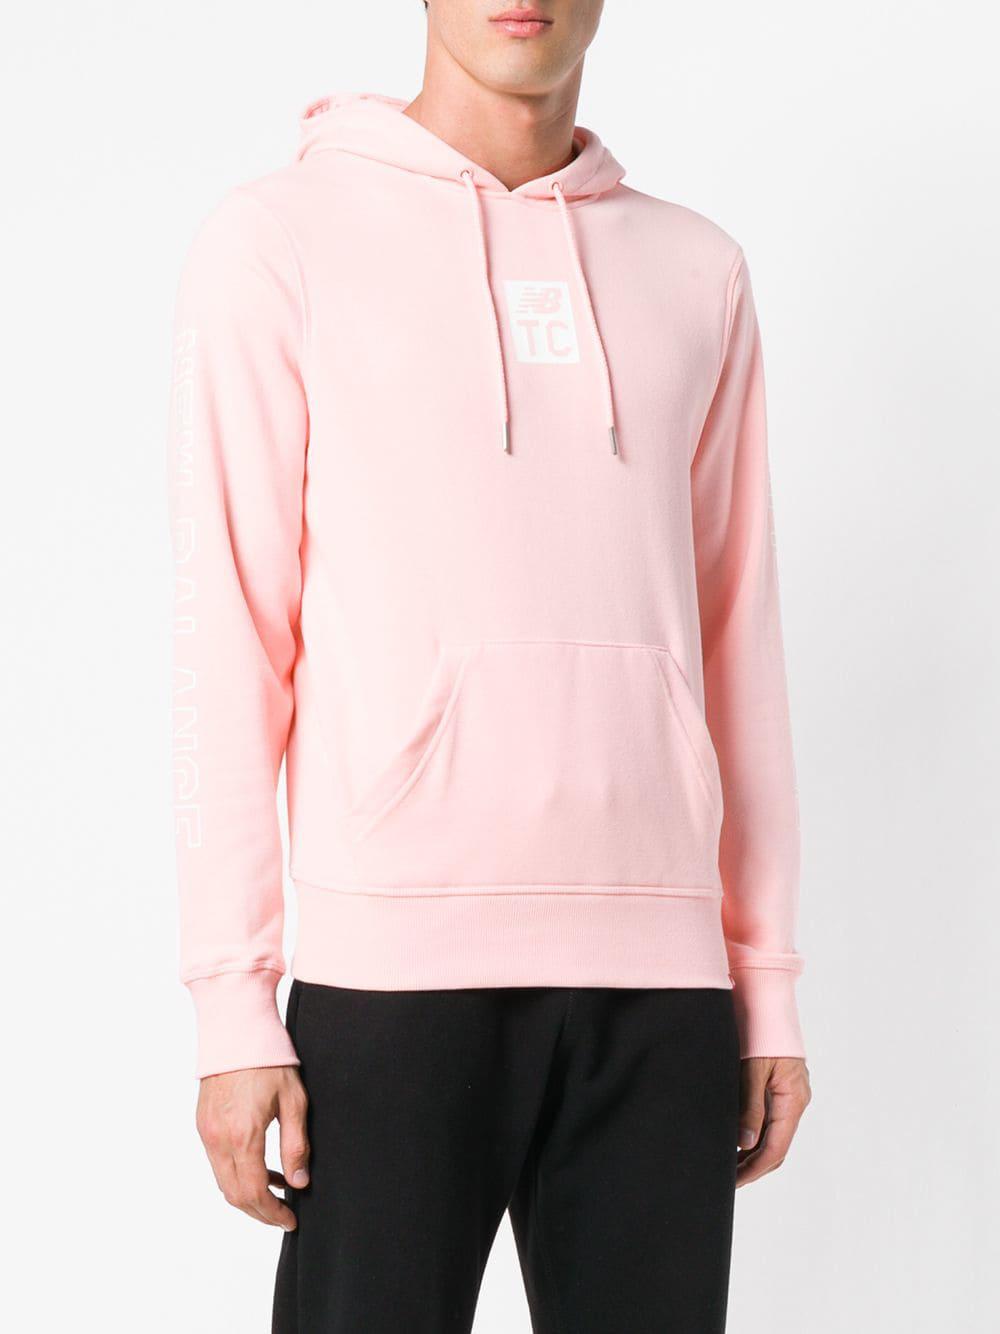 new balance pink hoodie